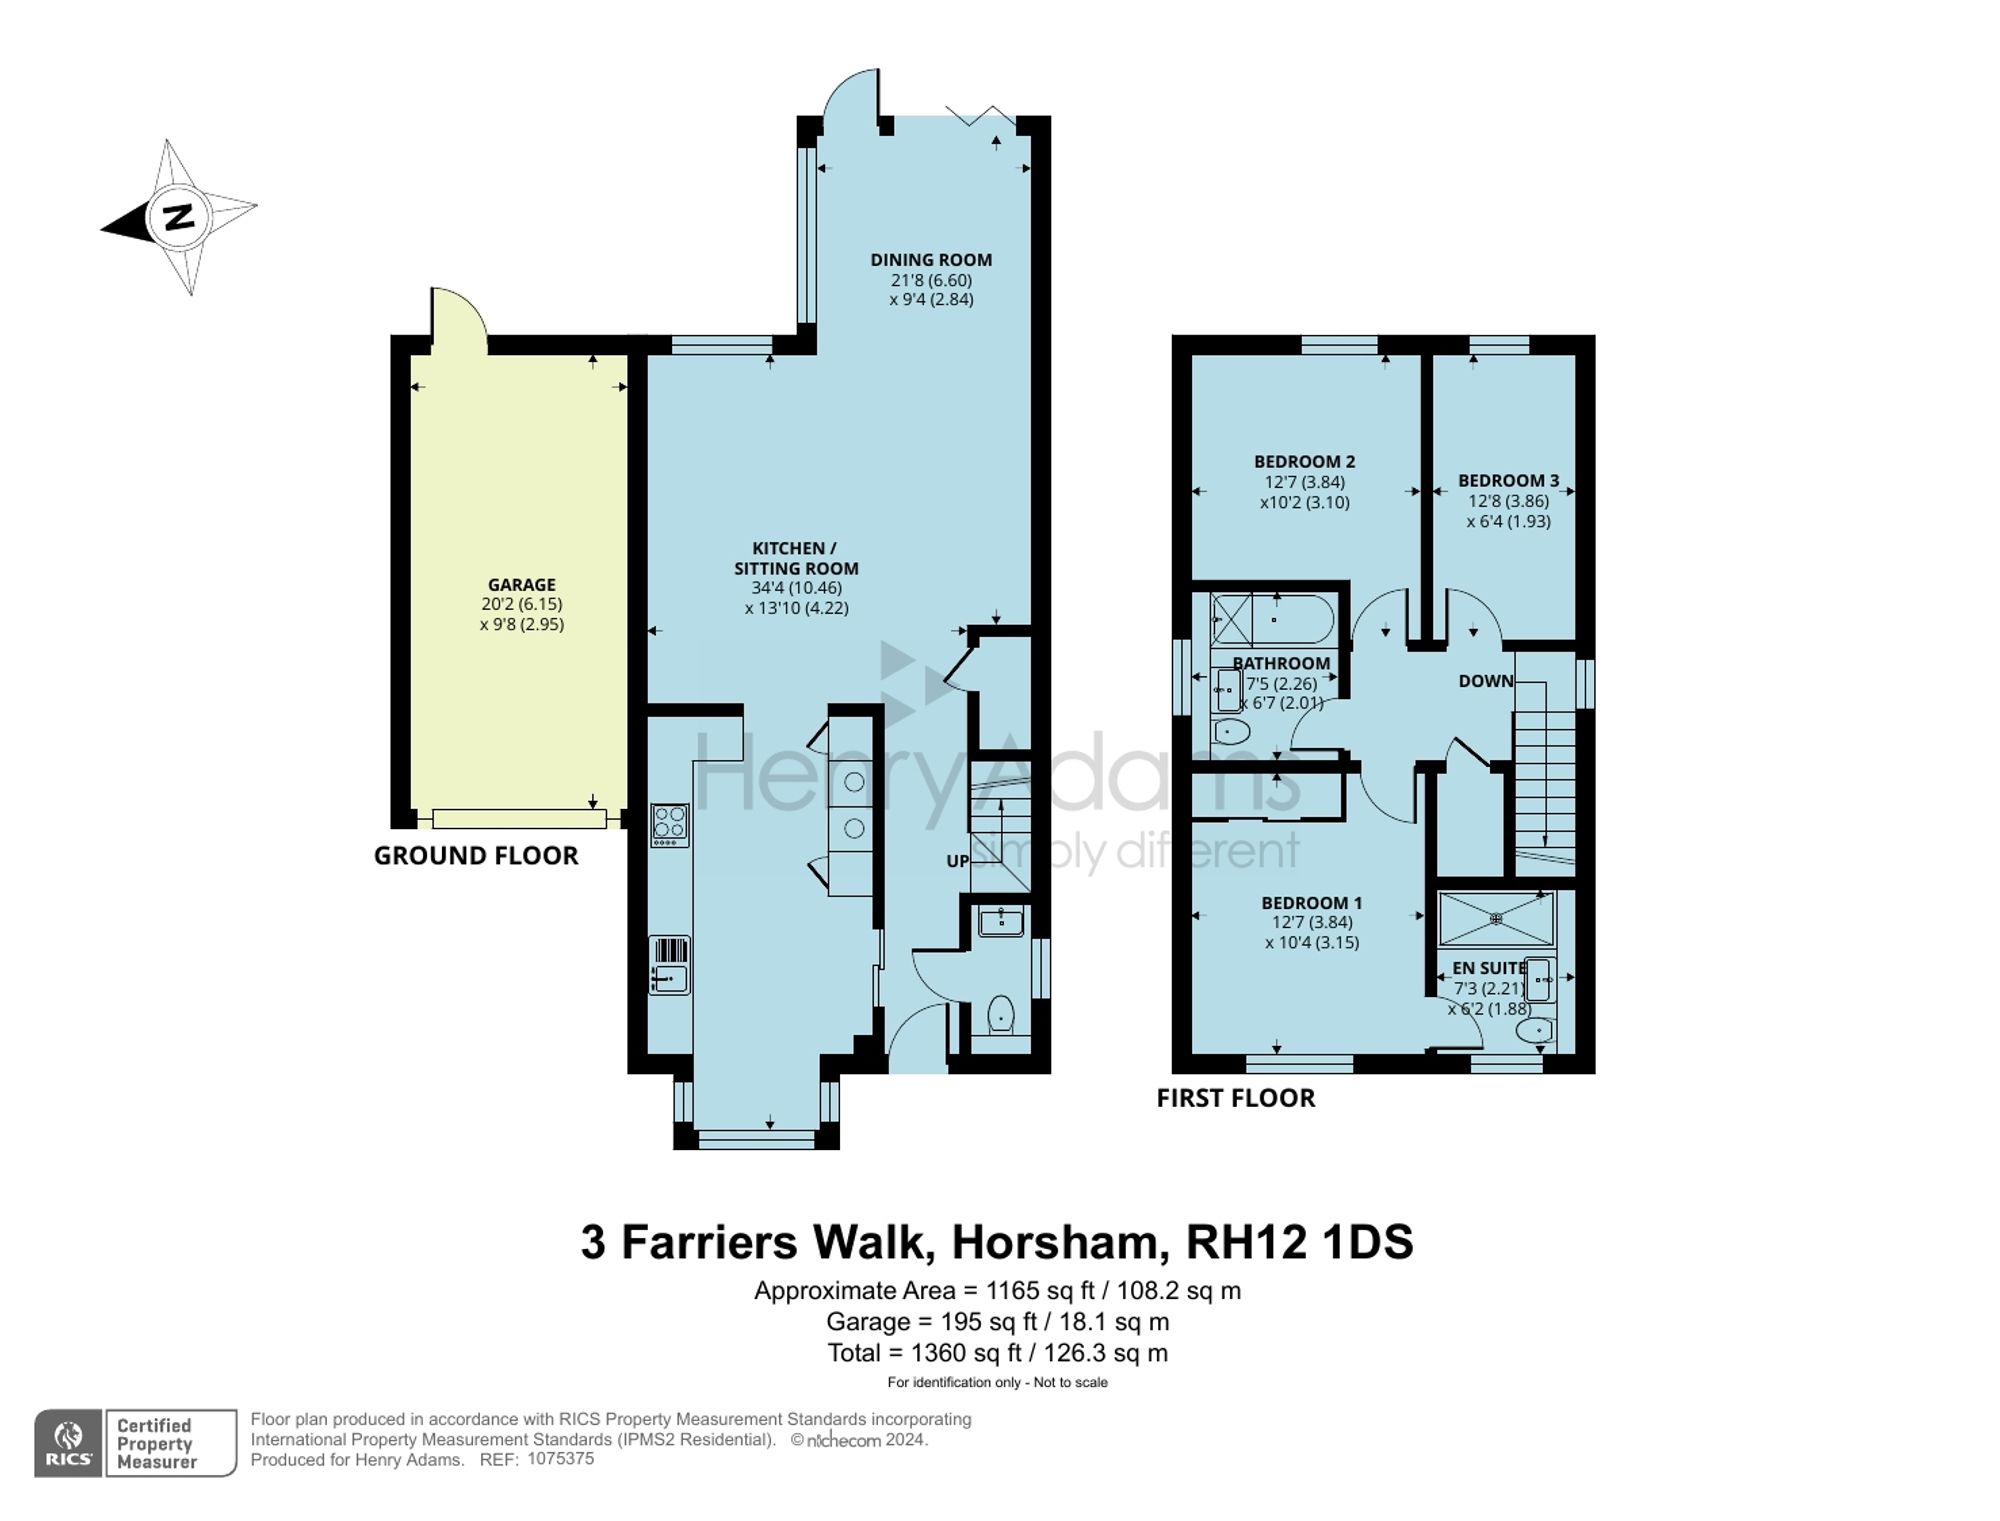 Farriers Walk, Horsham, RH12 floorplans